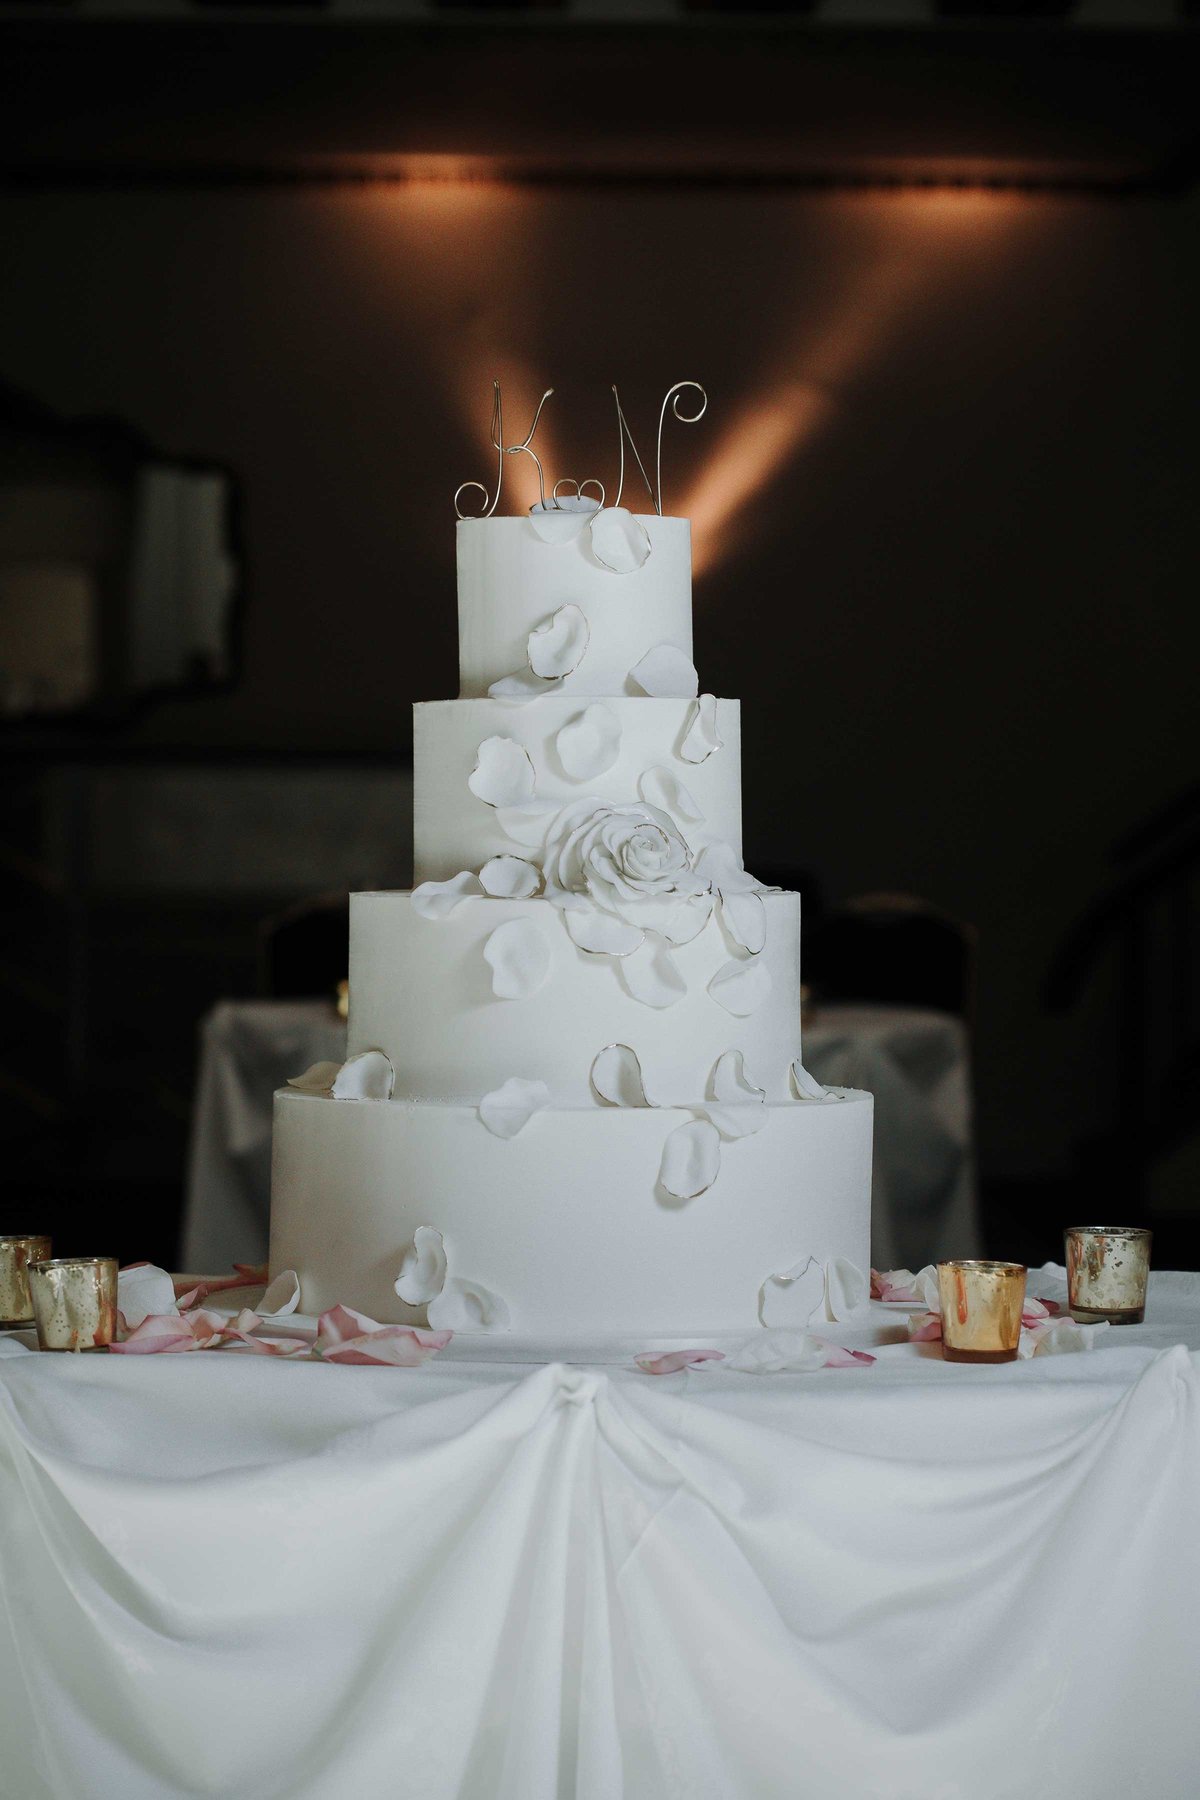 knickerbocker-wedding-cake